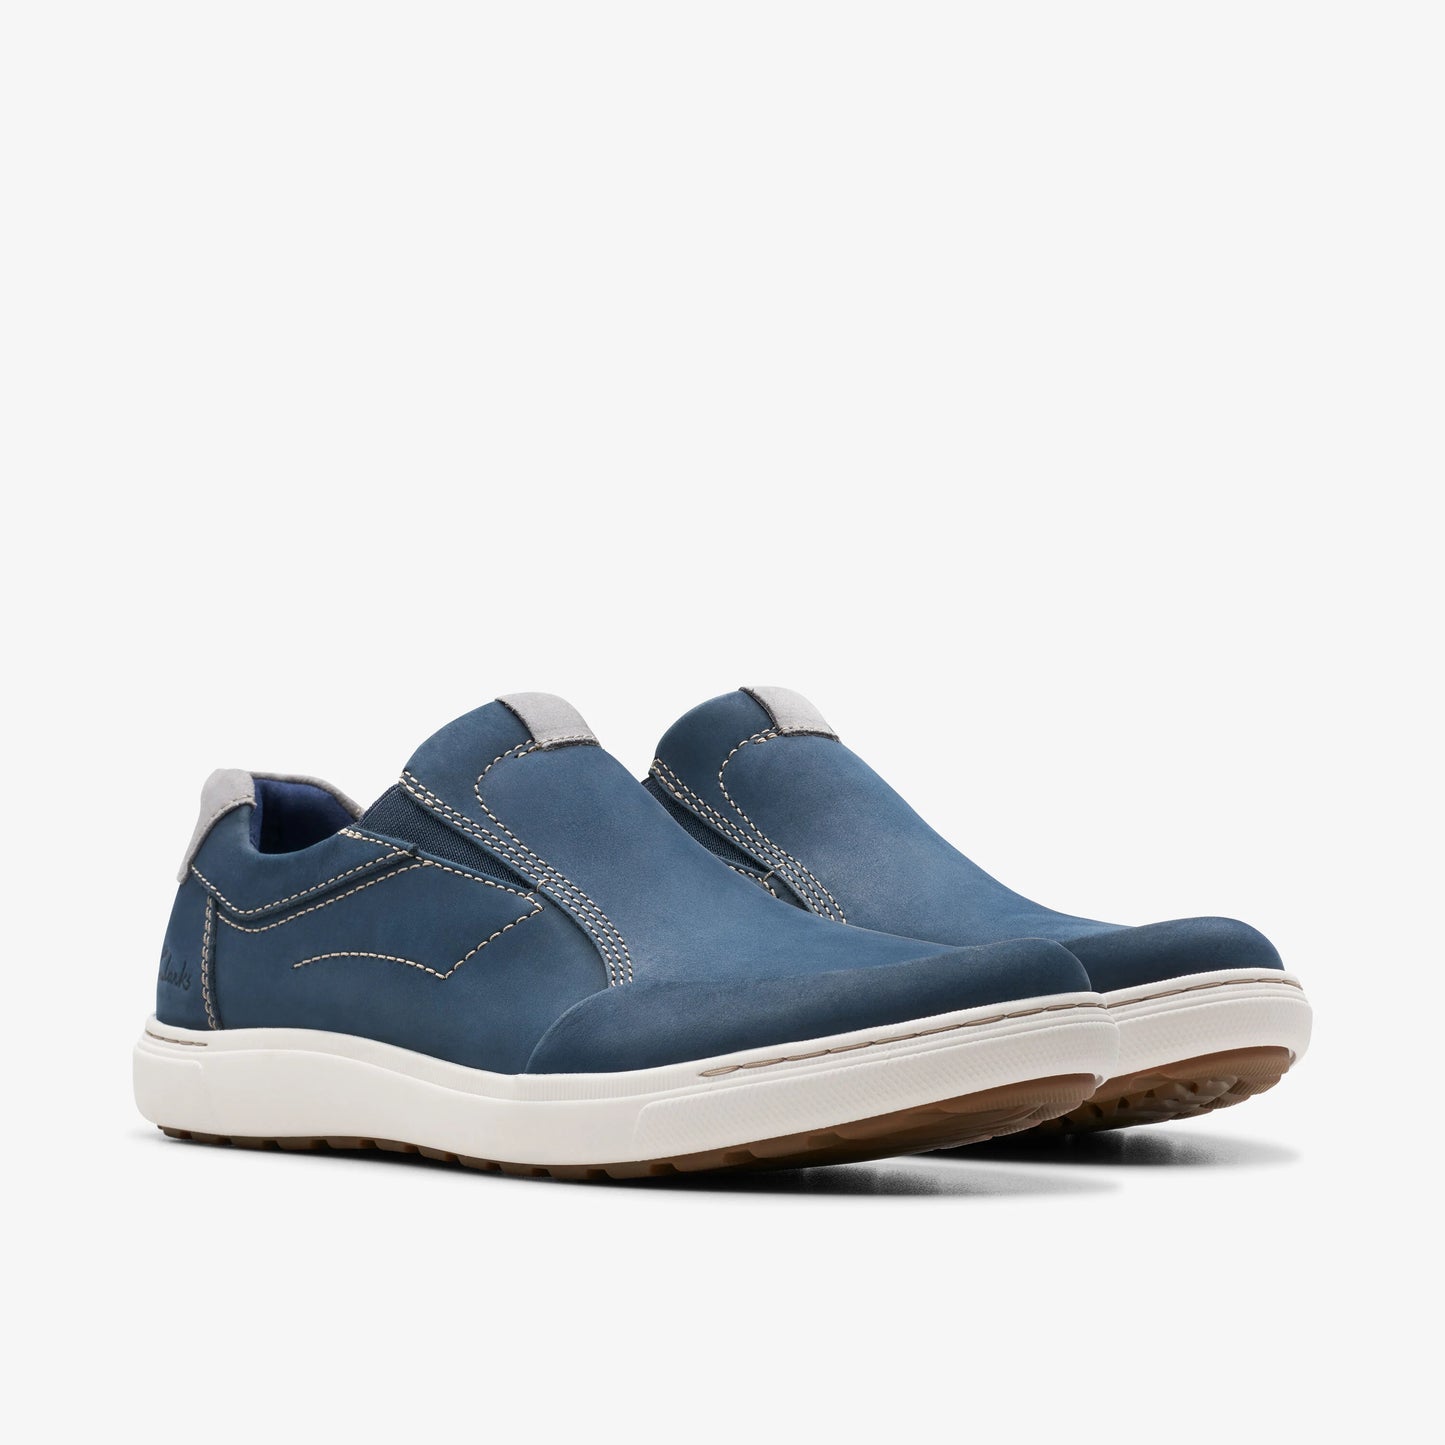 CLARKS | 남자를위한 캐주얼 신발 | MAPSTONE STEP NAVY NUBUCK | 파란색